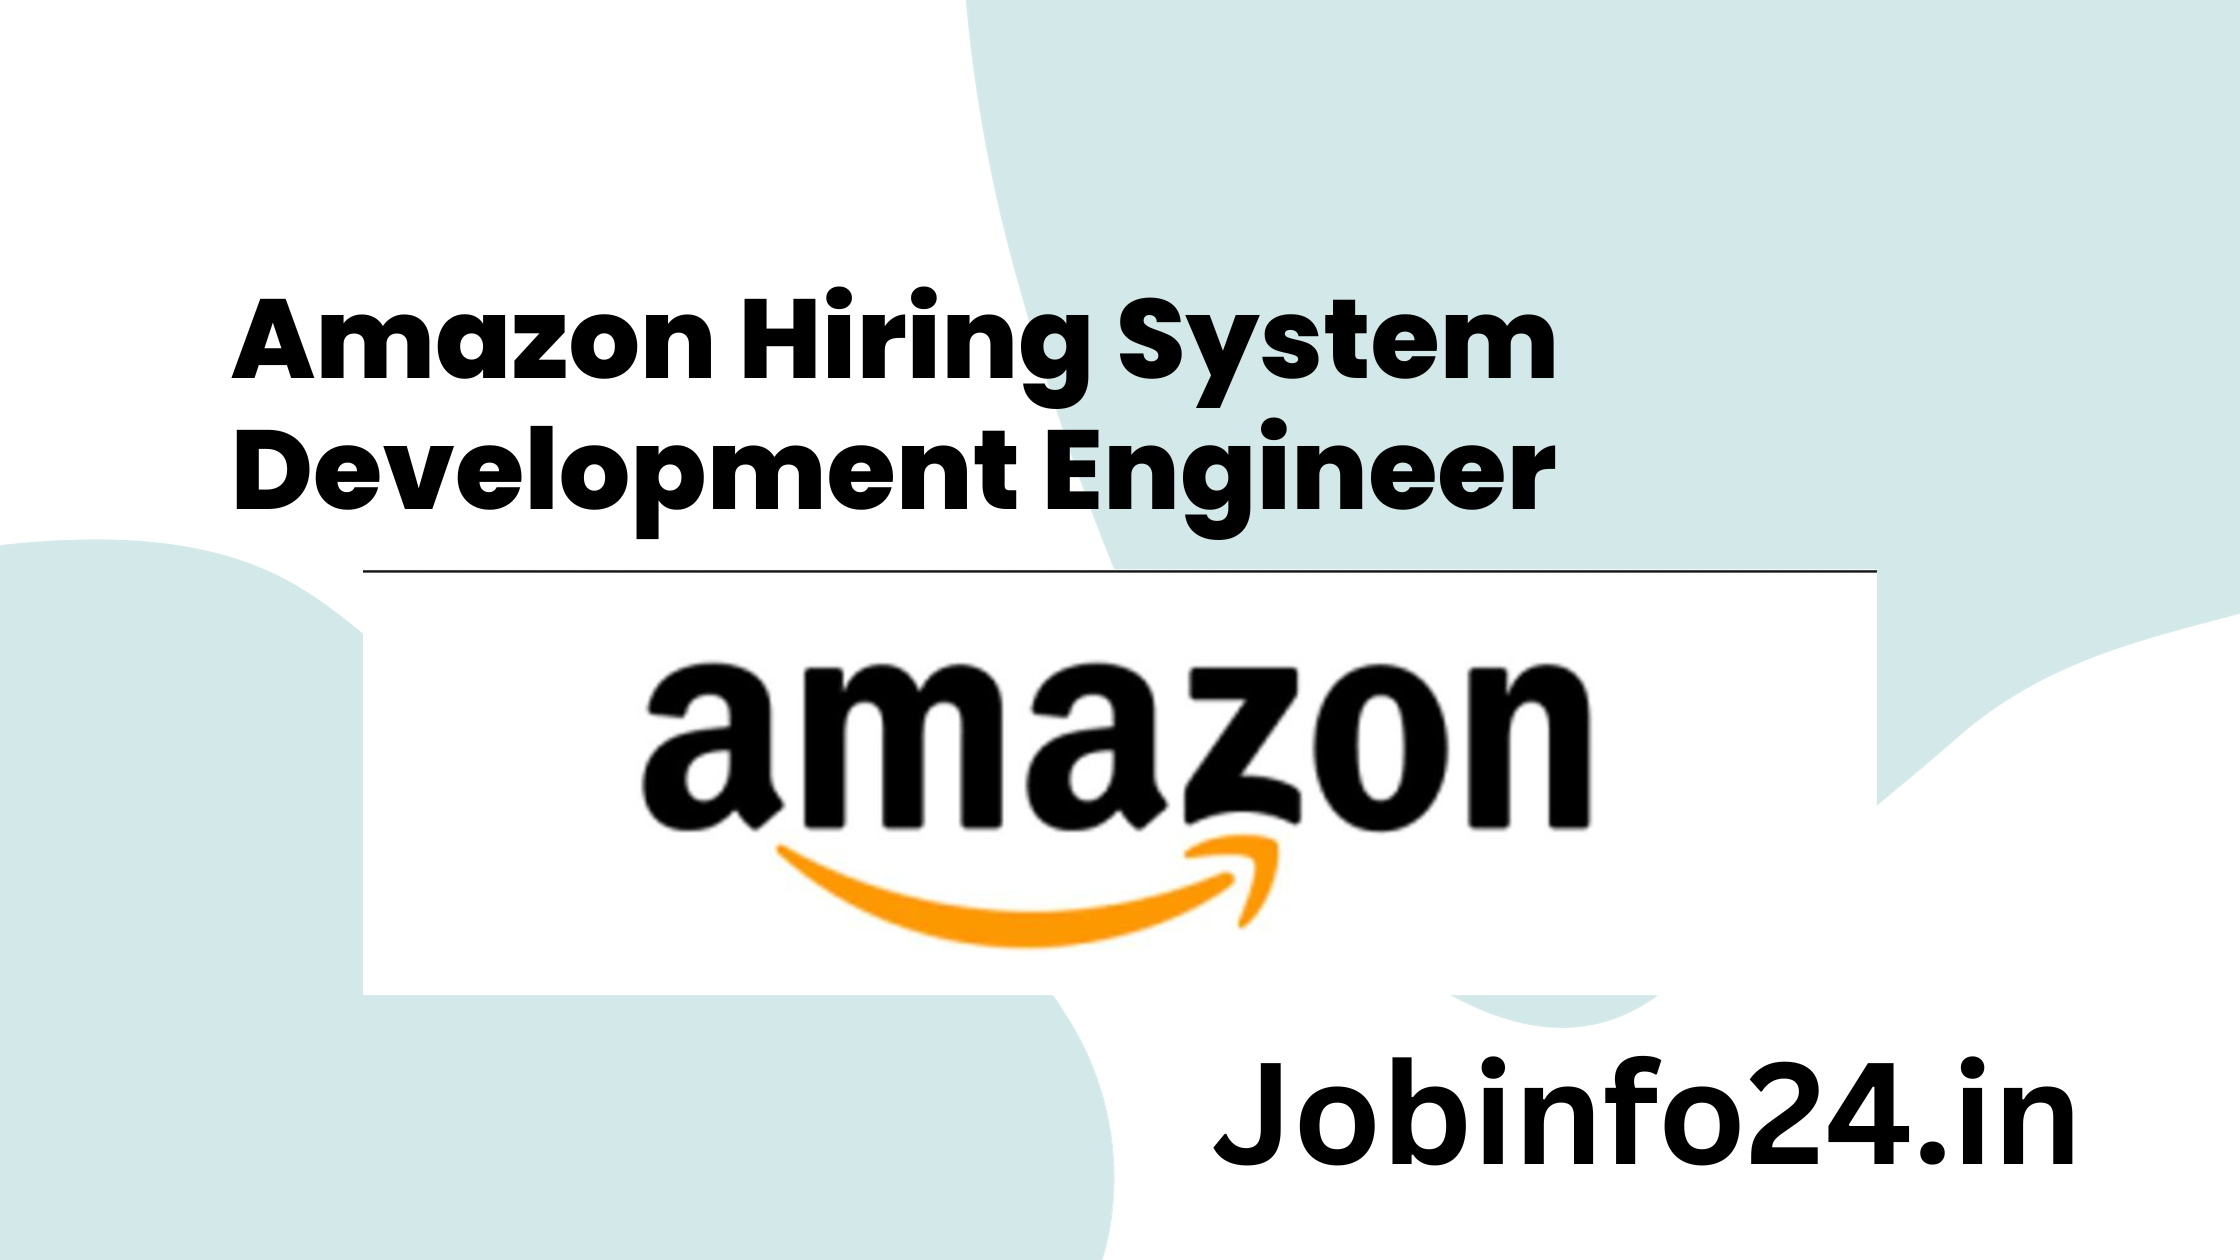 Amazon Hiring System Development Engineer